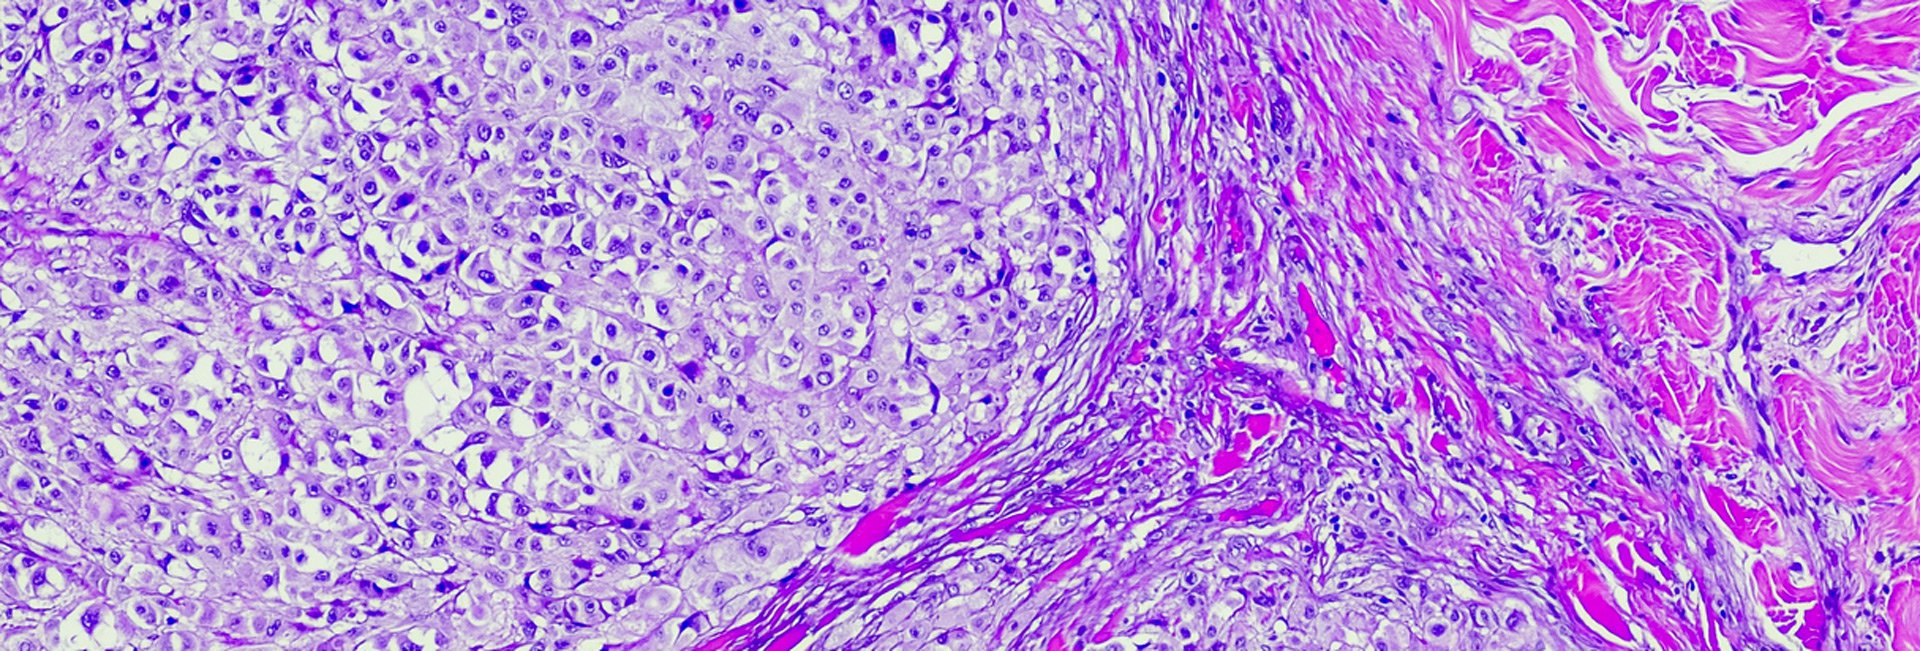 metastatic melanoma cells seen through a microscope slide